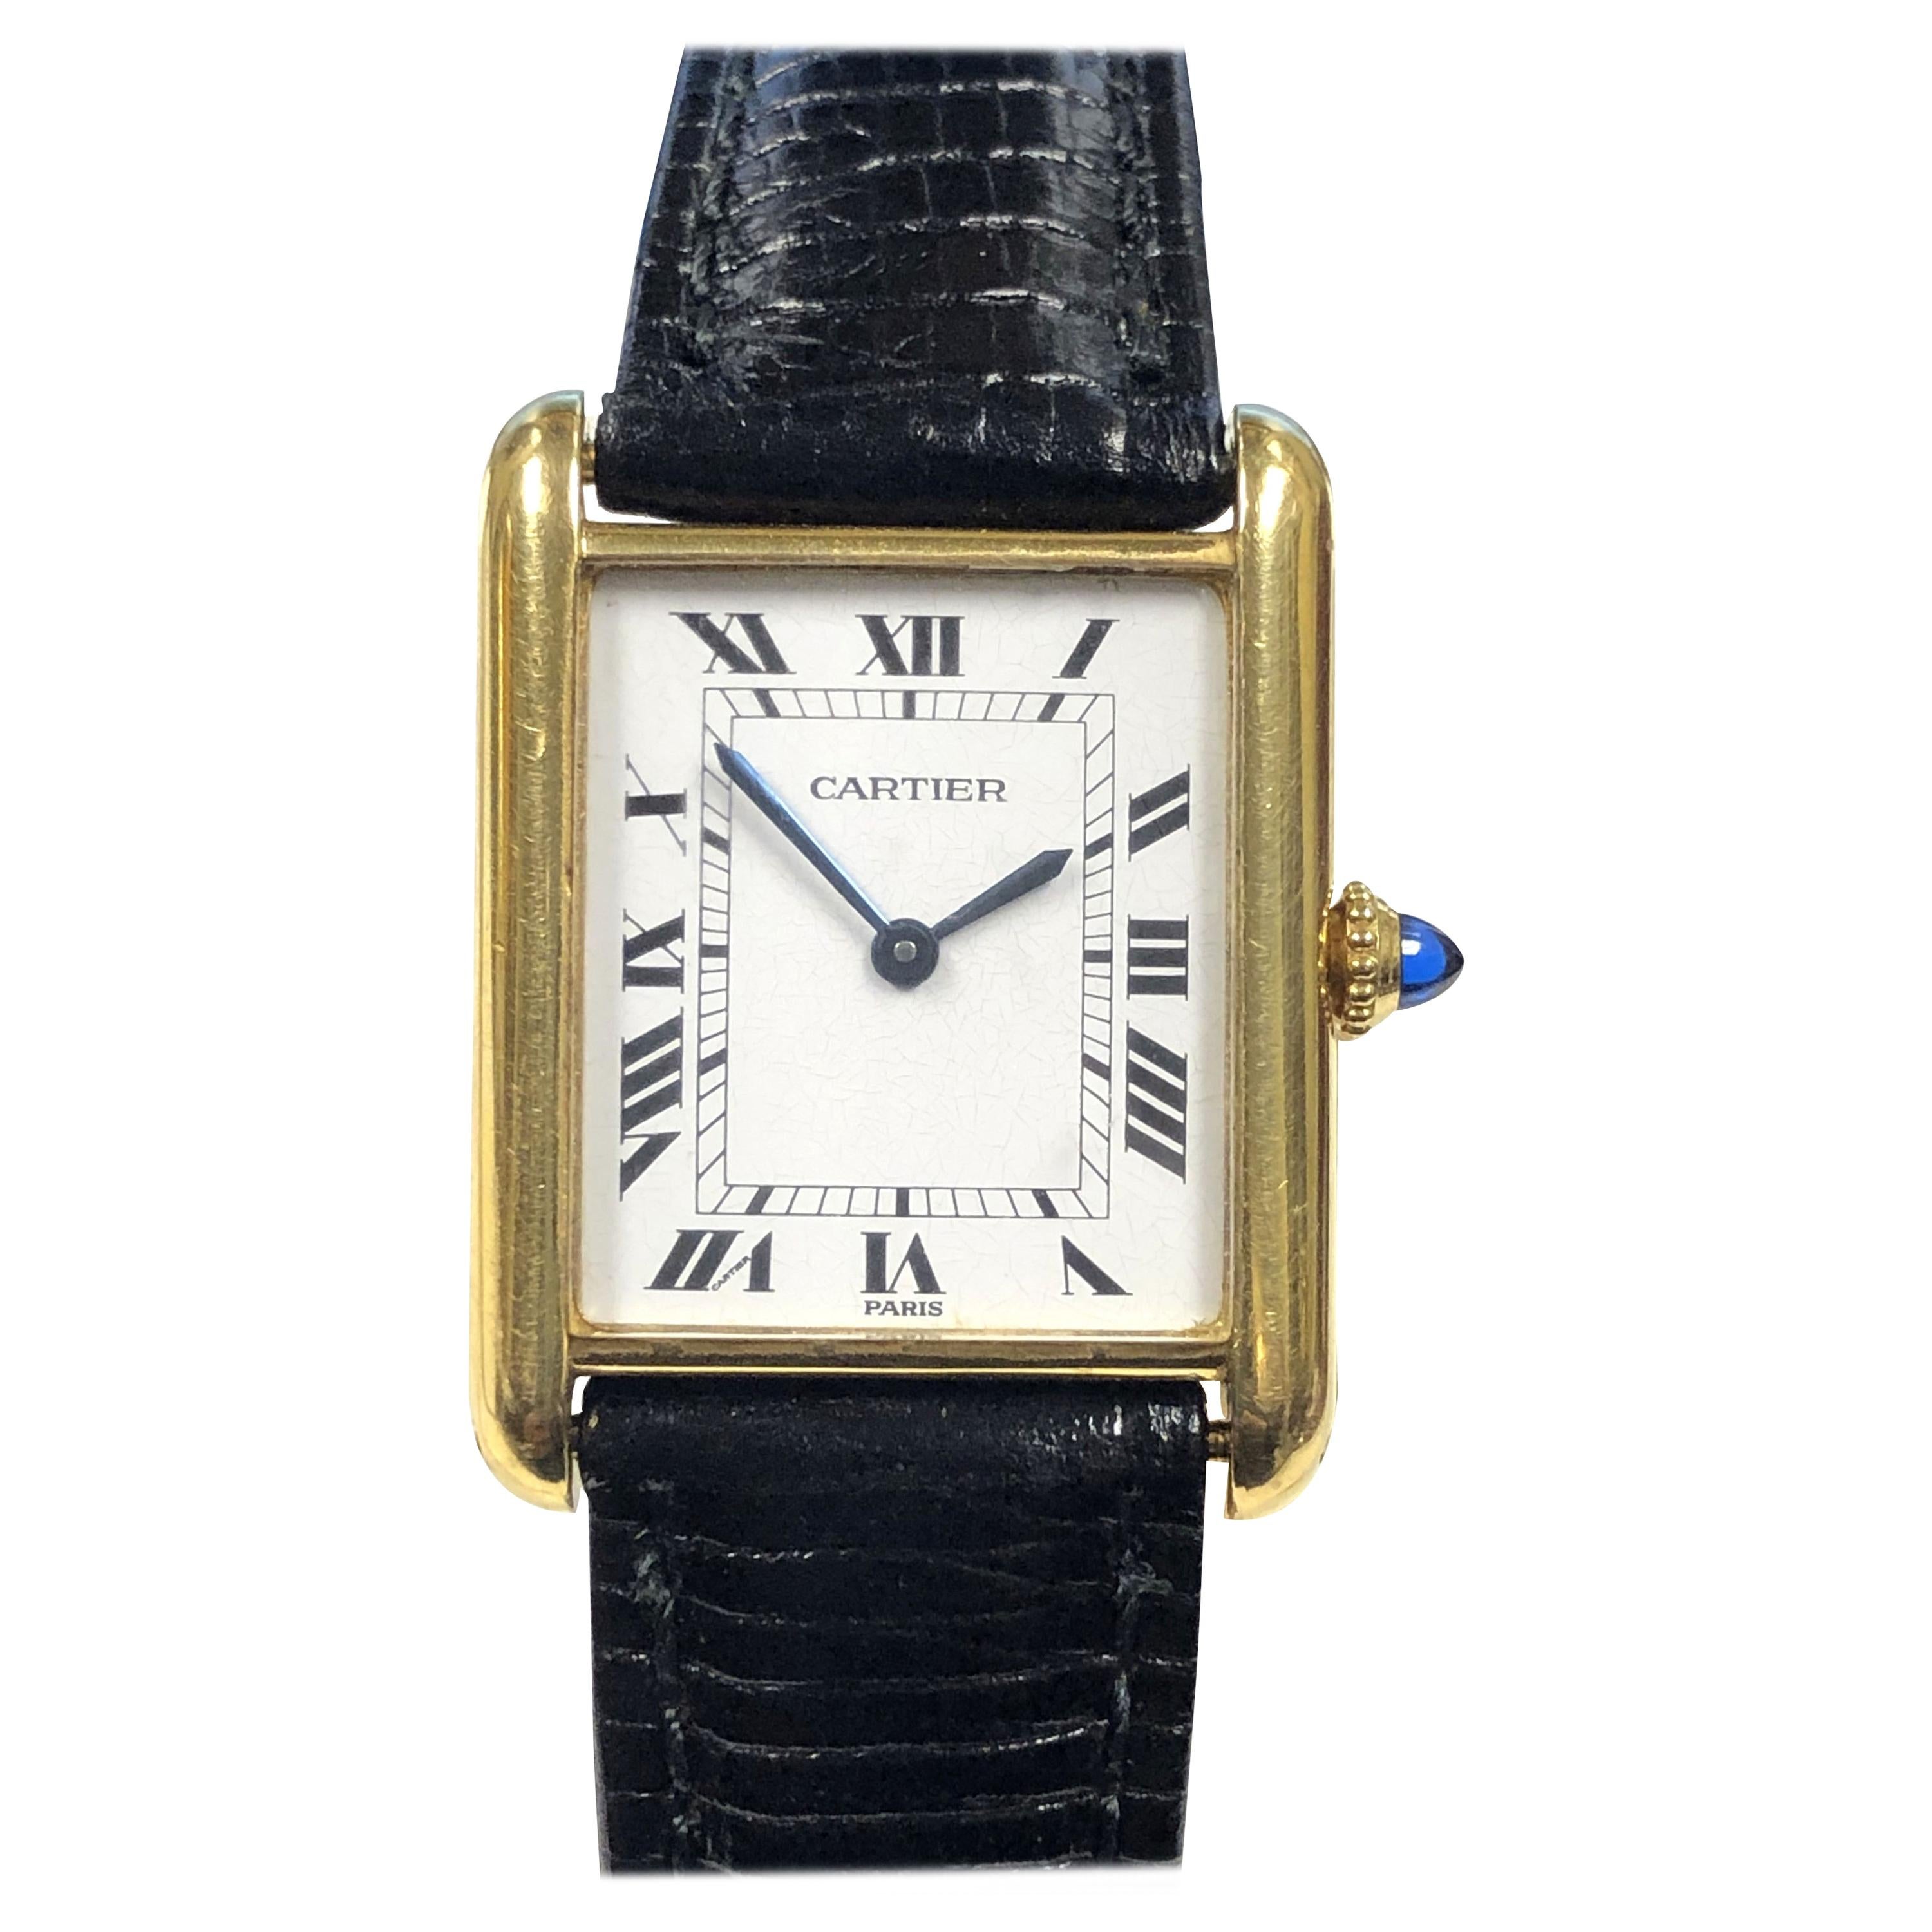 Vintage Cartier Paris Classic Yellow Gold Manual Wind Tank Watch